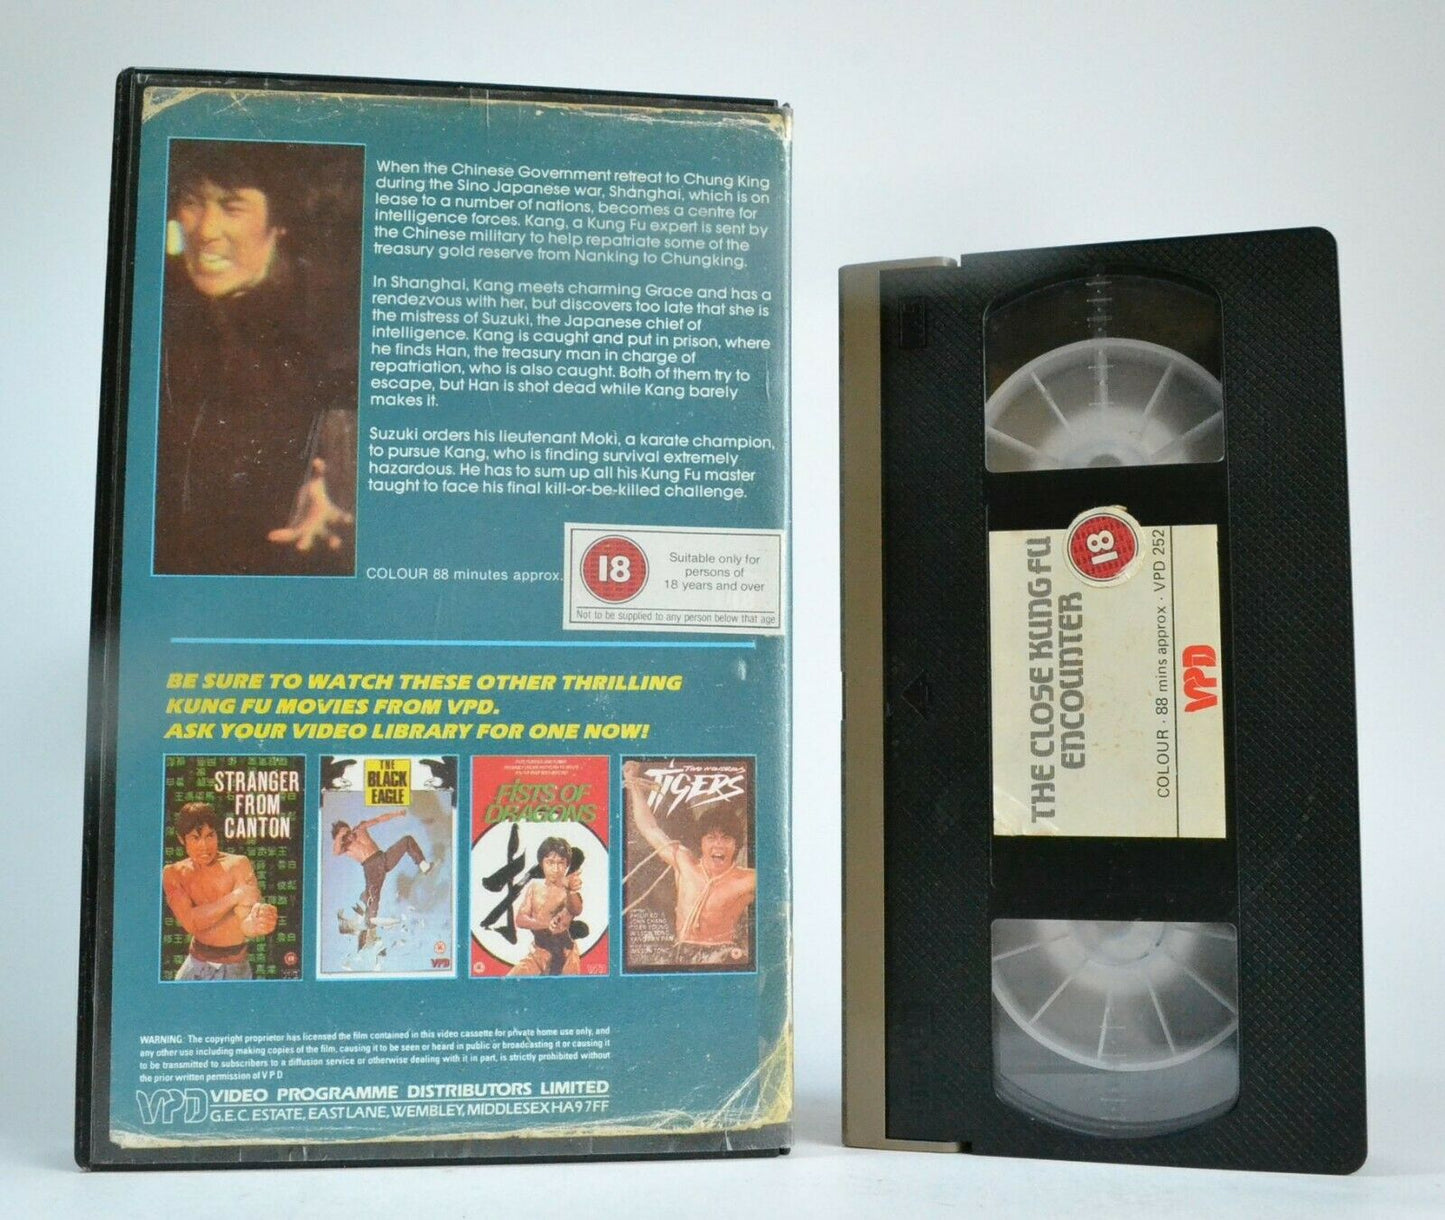 The Close Kung Fu Encounter (Daetalchul); Korea - VPD - Pre-Cert - Action - VHS-